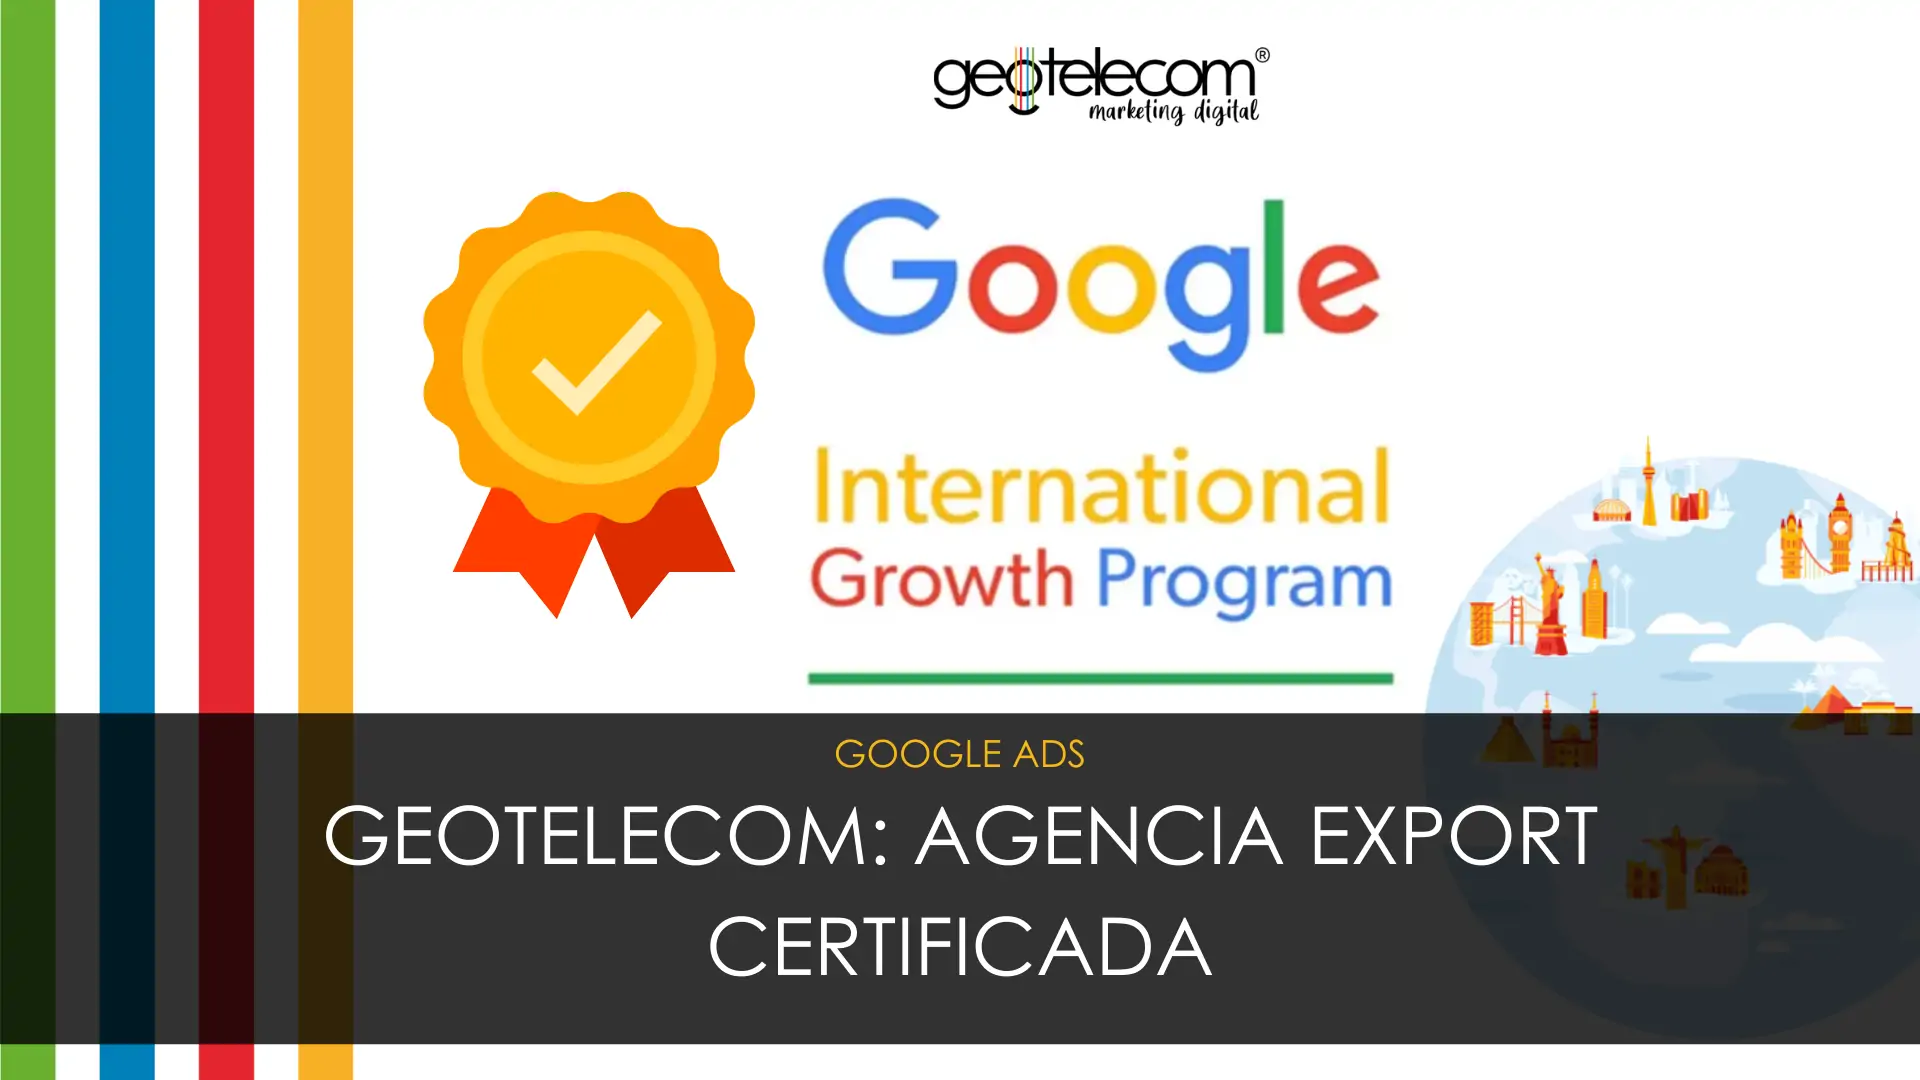 Agencia Export certificada